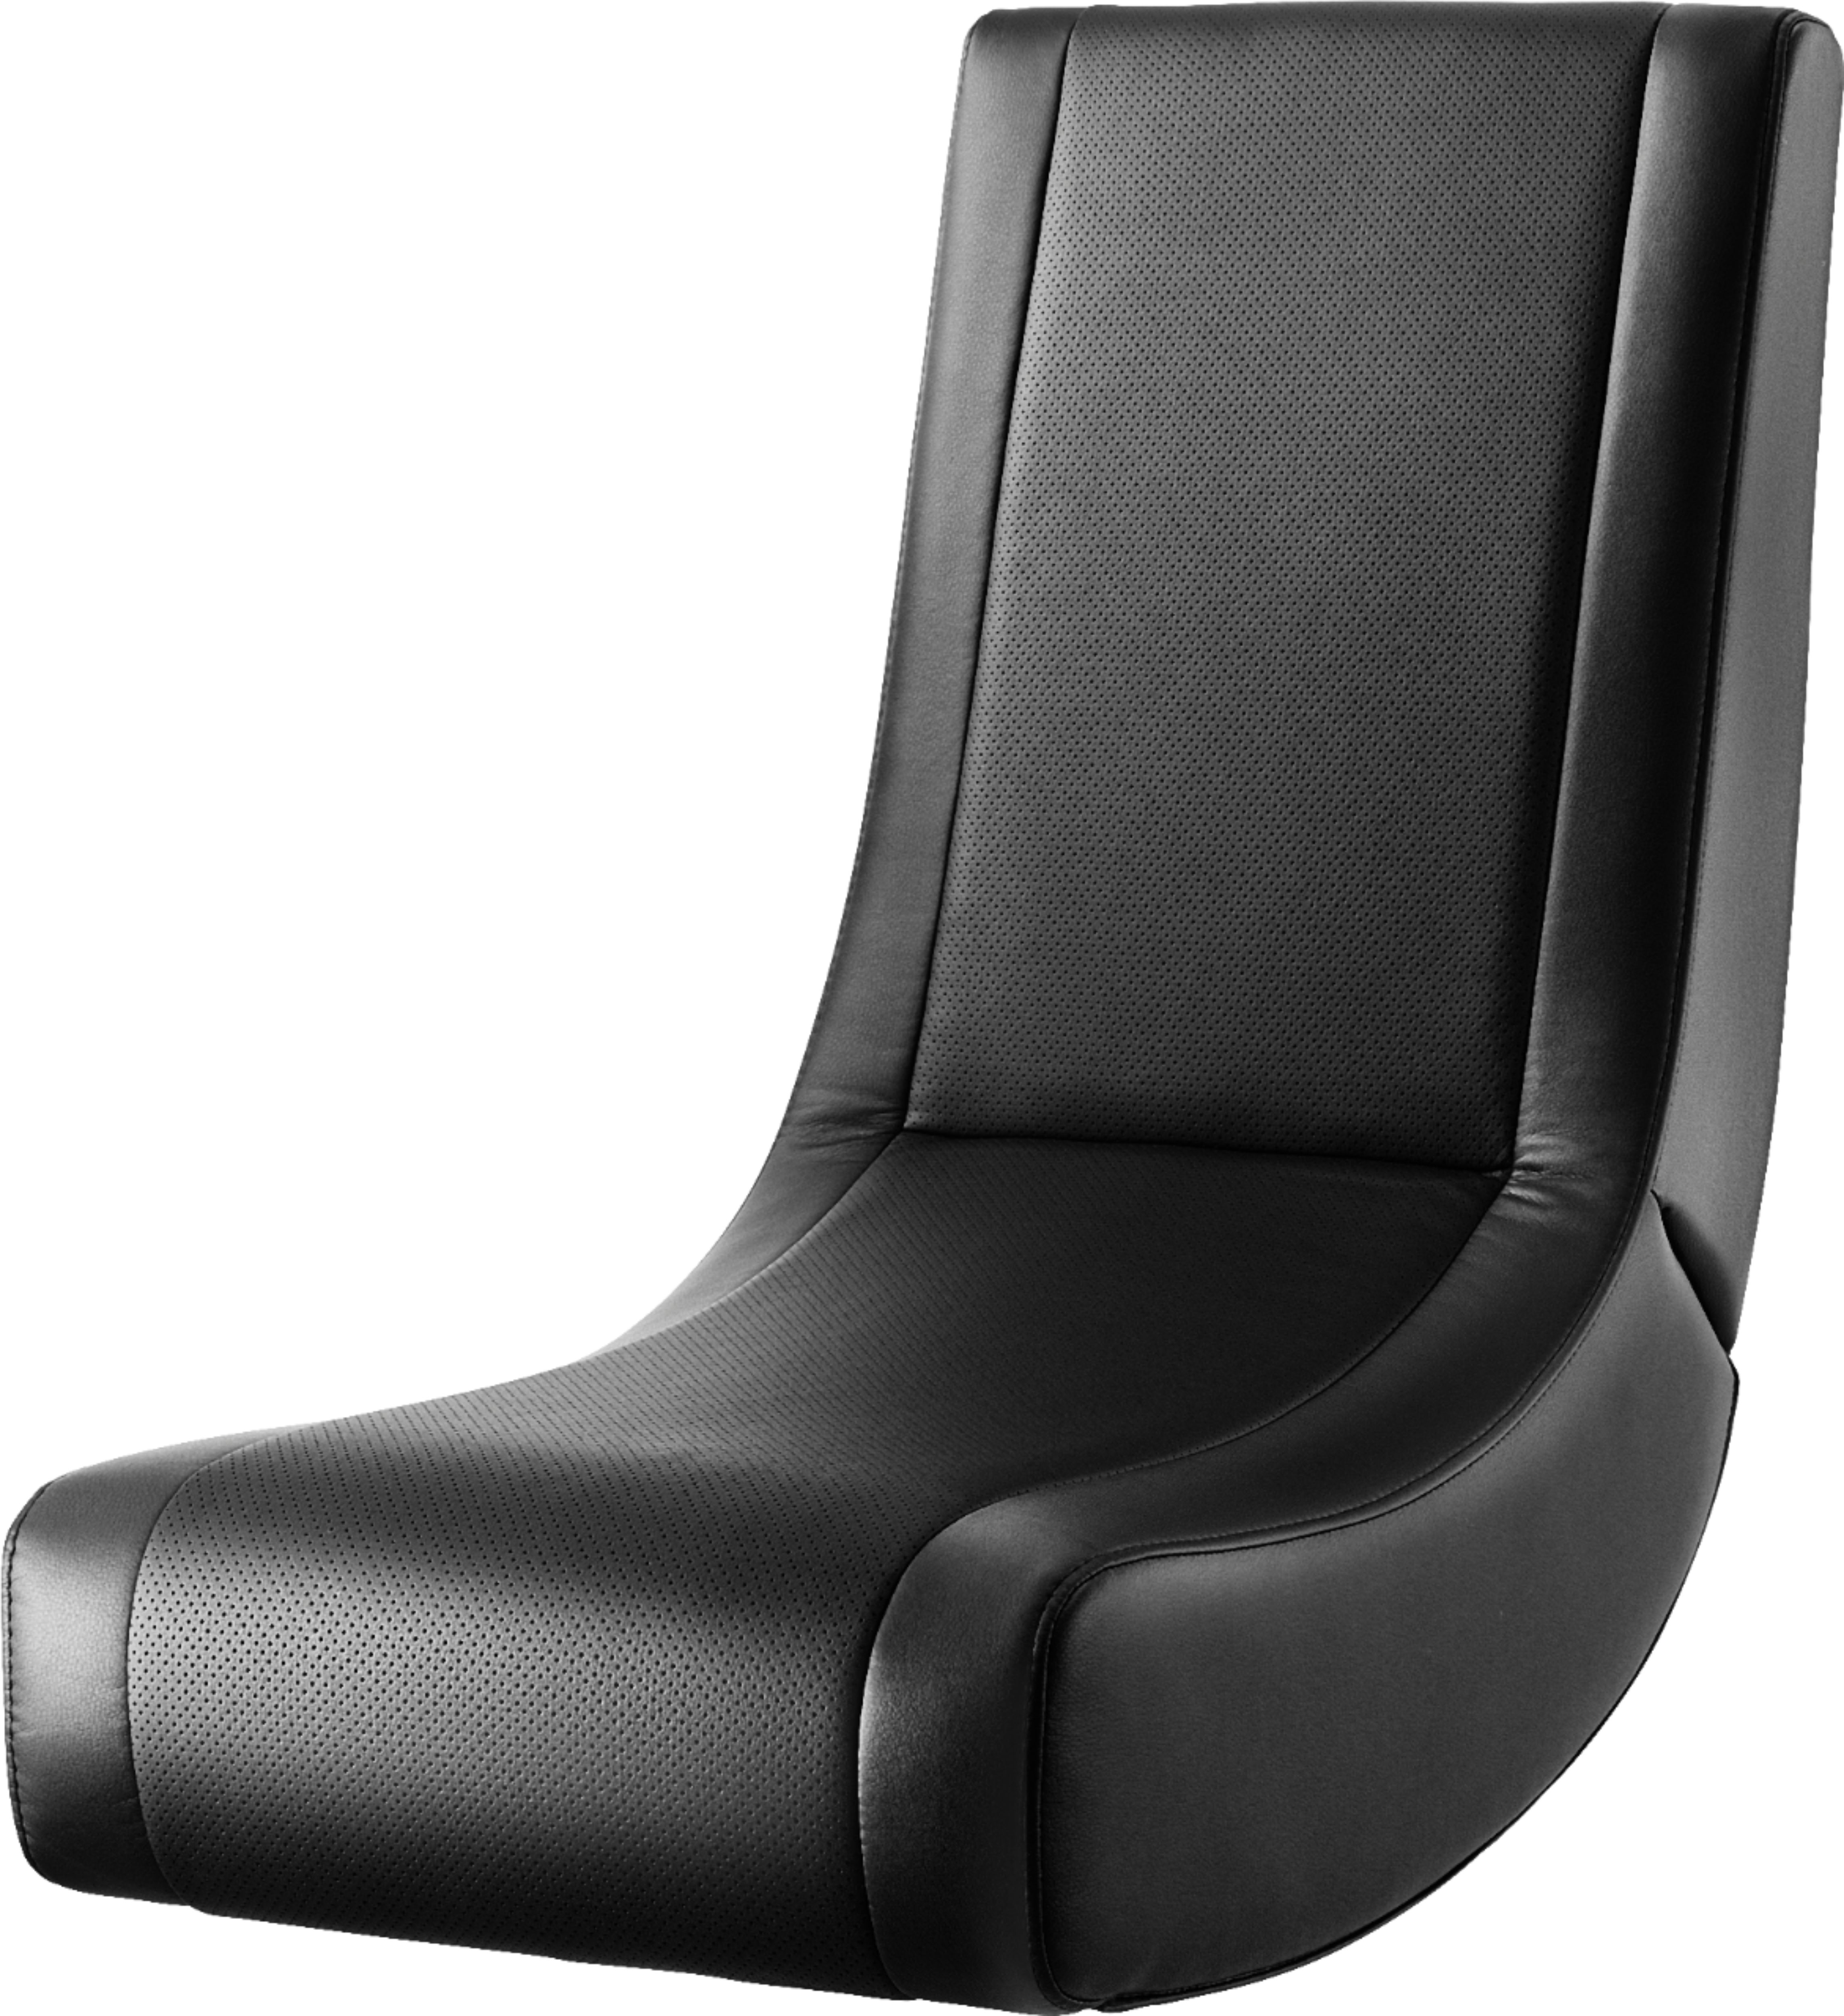 Best Buy Insignia Rocker Gaming Chair Black Ns Ggch19